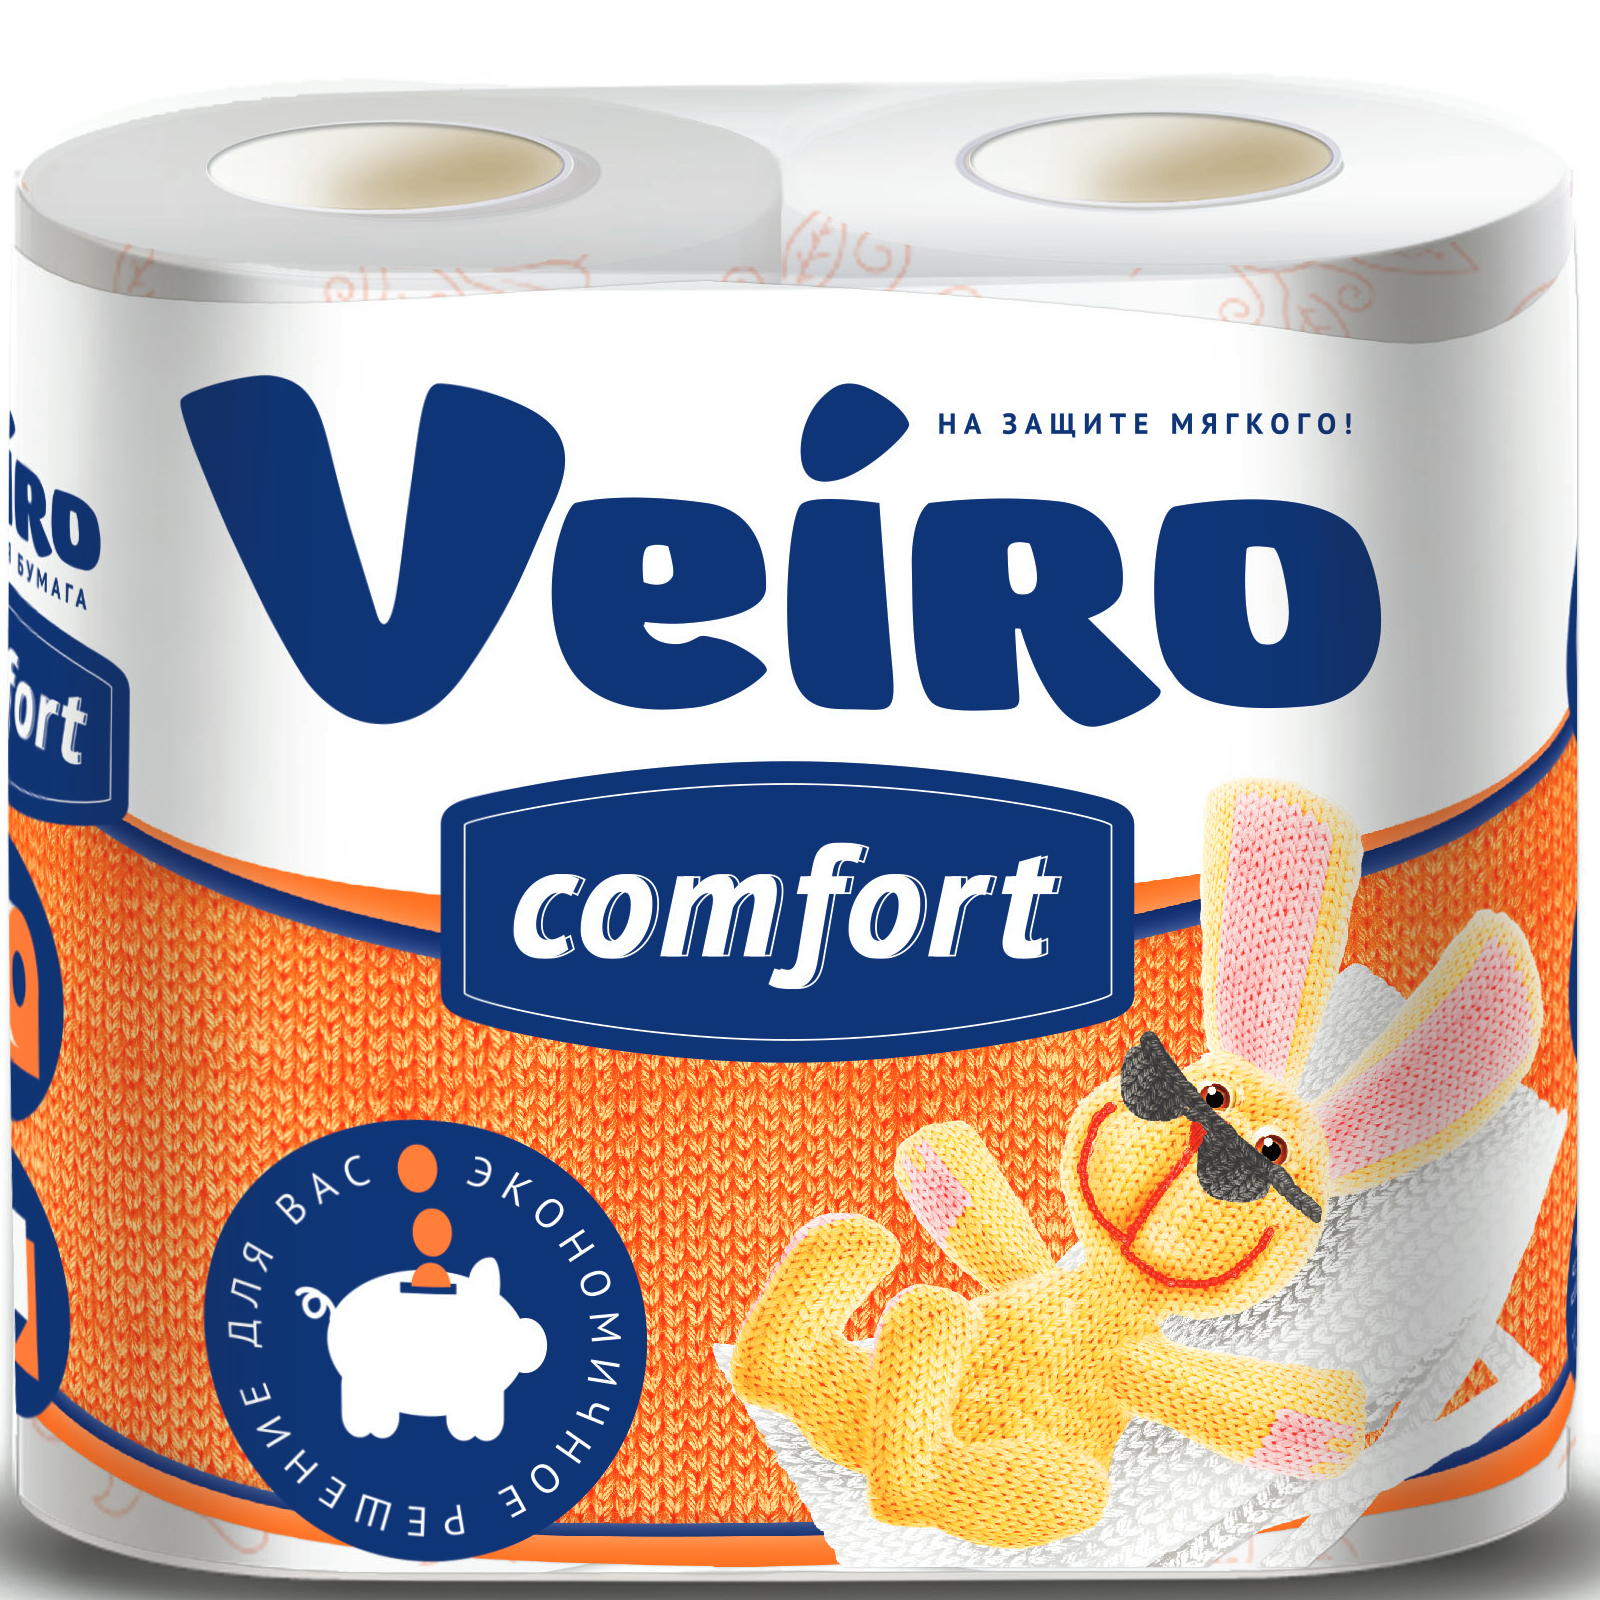 Бумага туалетная Linia Veiro comfort 2 слоя, 4 рулона, 17,5 м туалетная бумага veiro classic желтая 2 слоя 4 шт